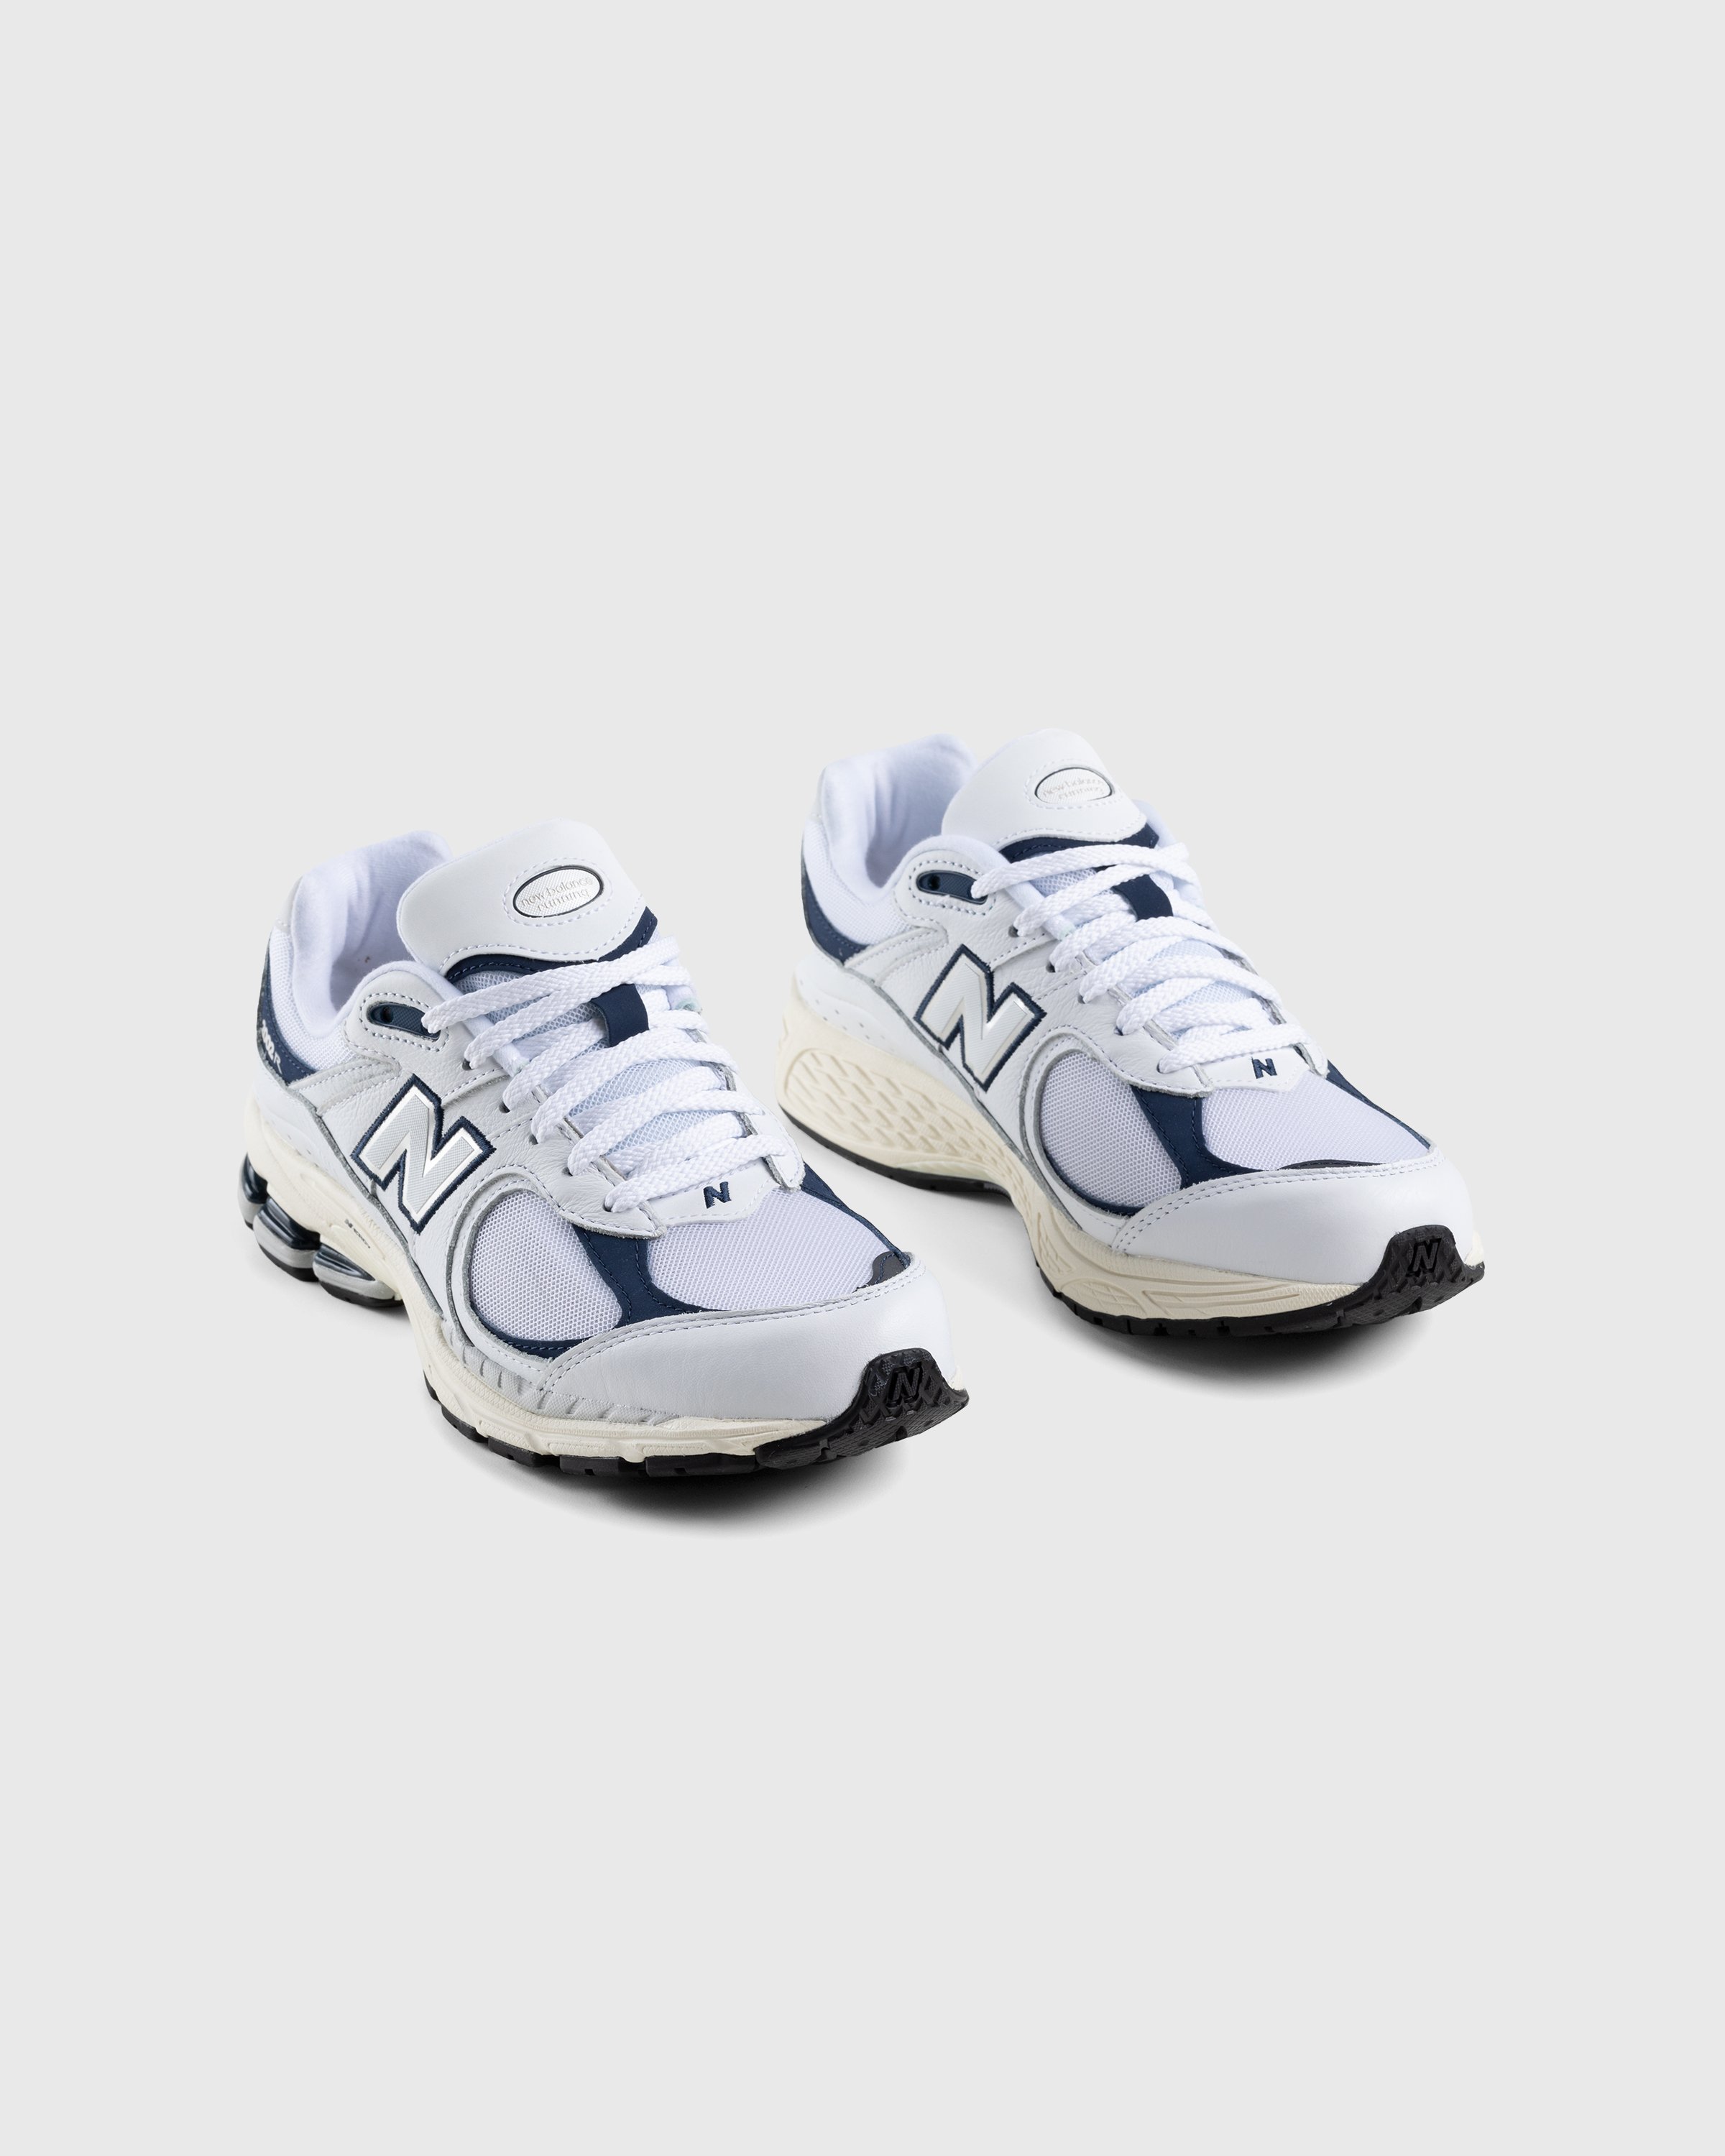 New Balance - M2002RHQ White - Footwear - White - Image 3